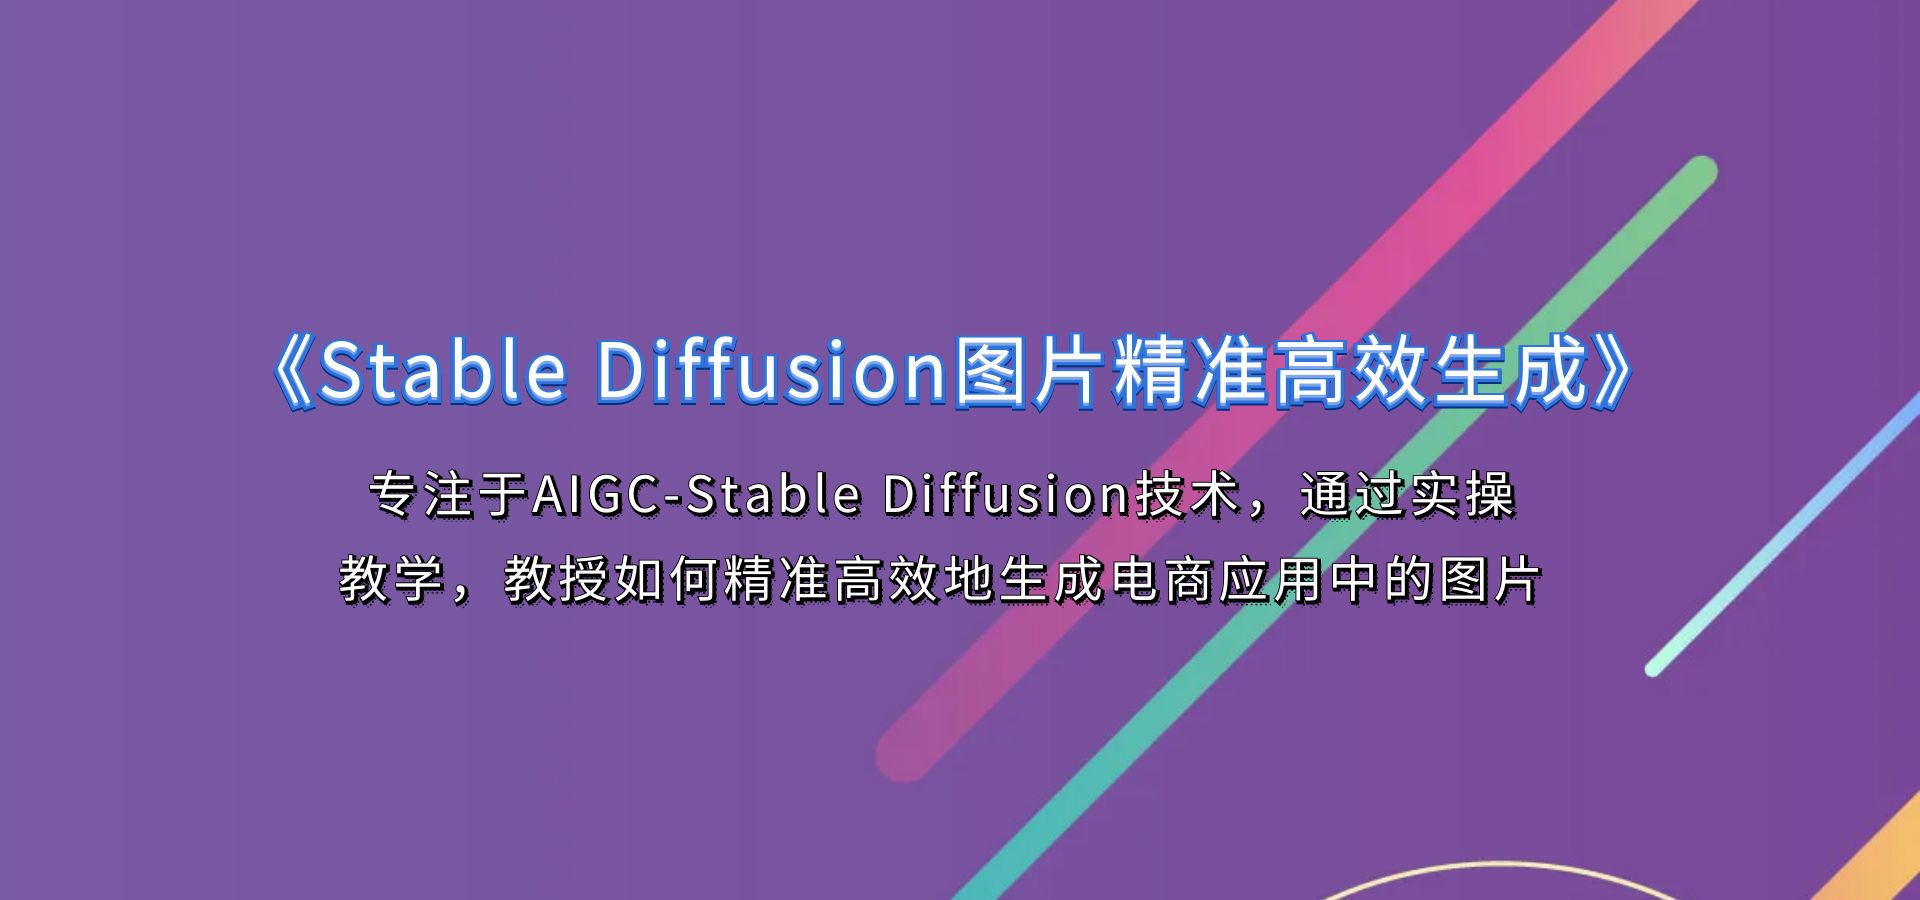 AI江子《Stable Diffusion图片精准高效生成》